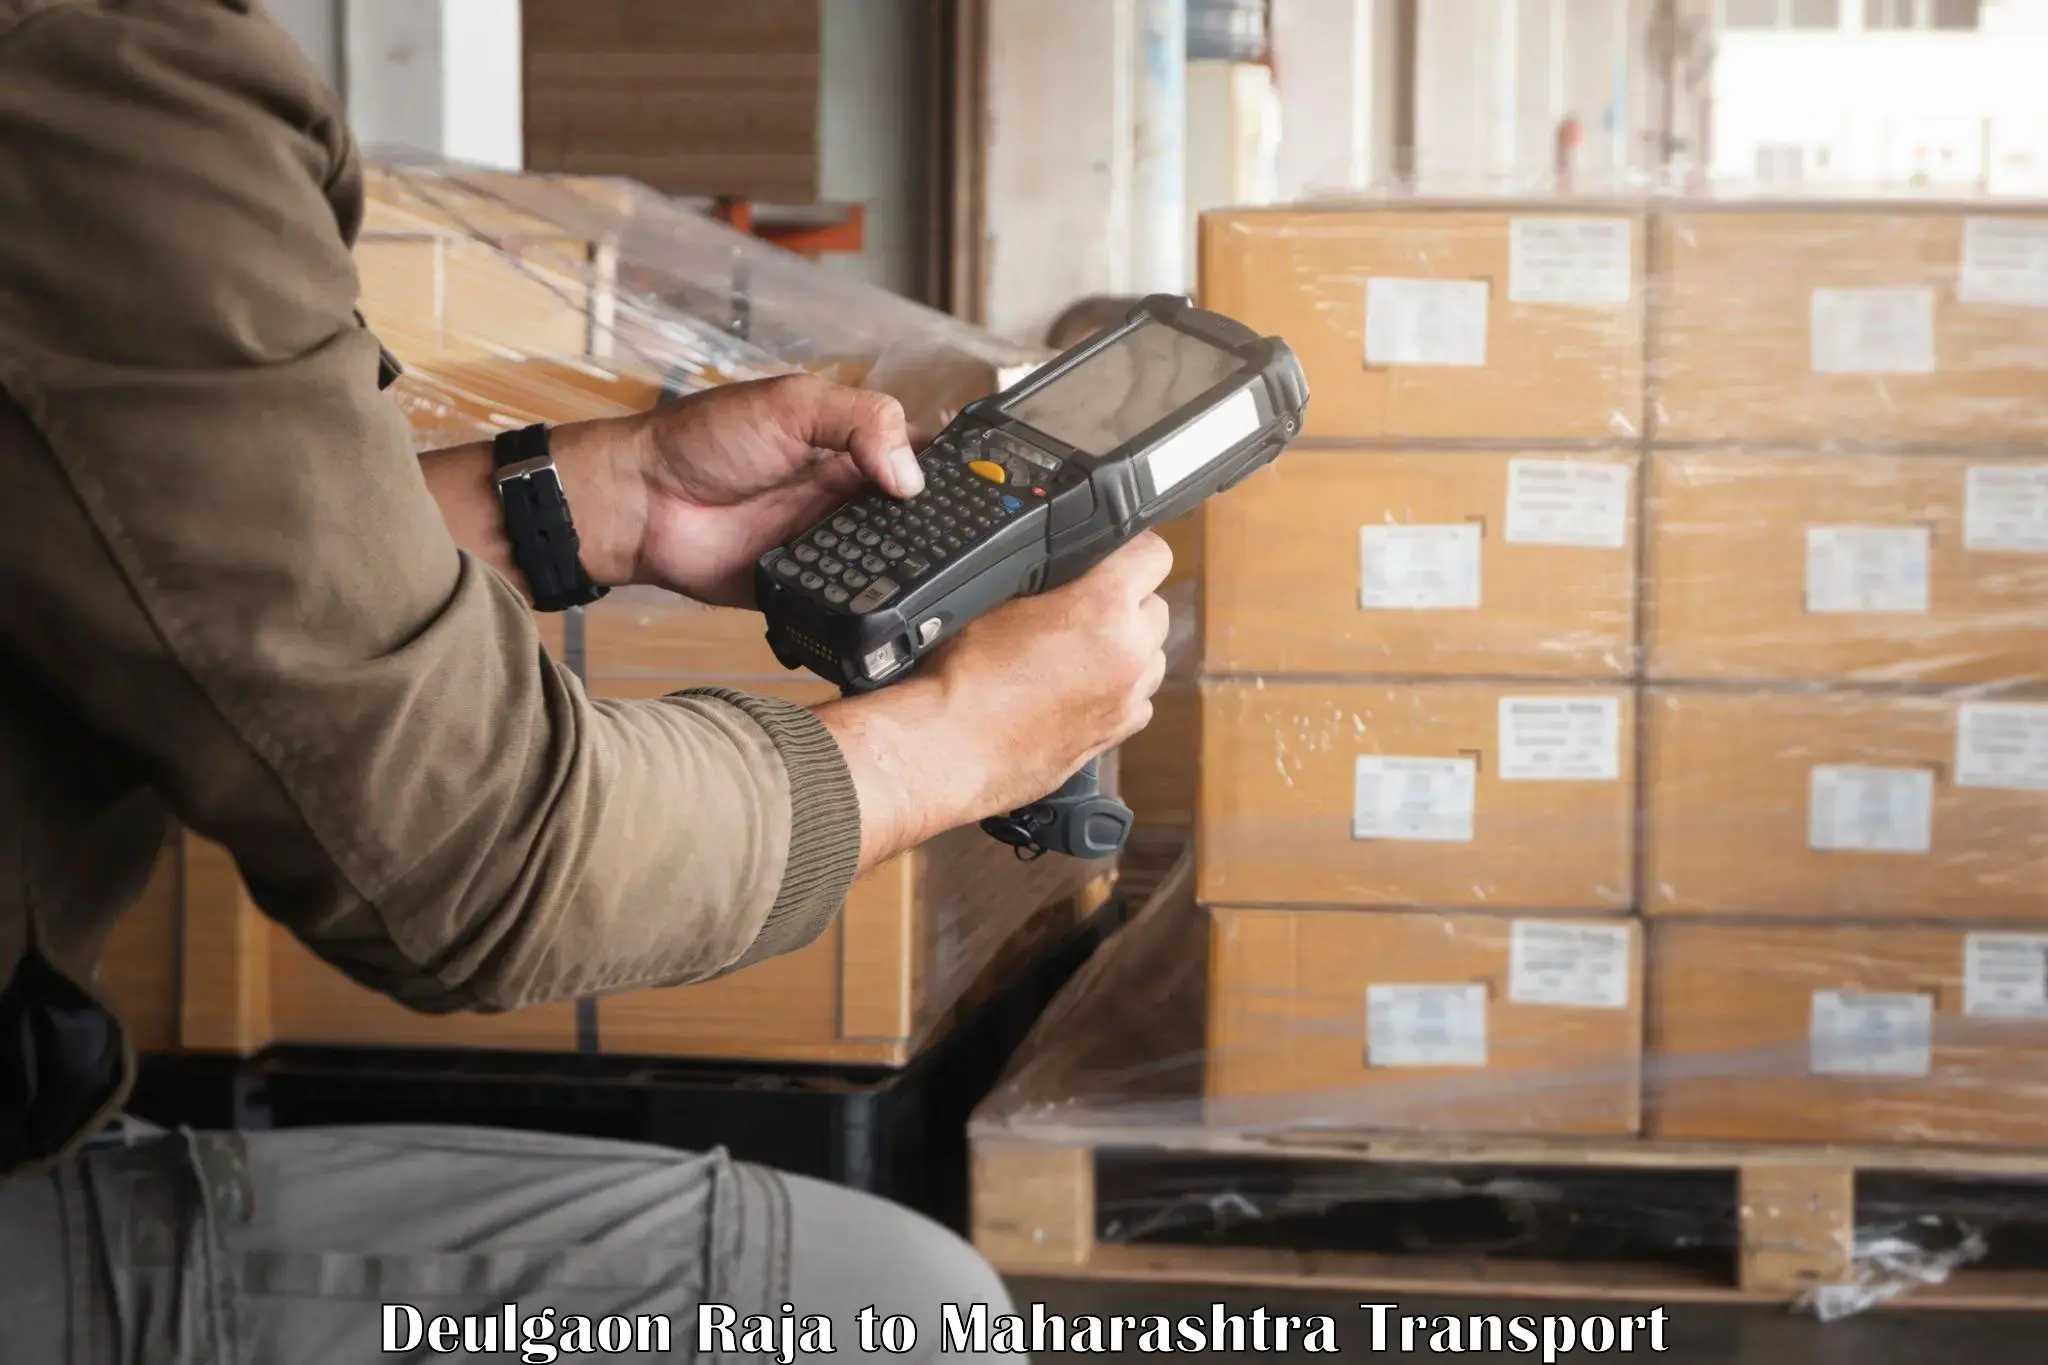 Lorry transport service Deulgaon Raja to Bhiwandi